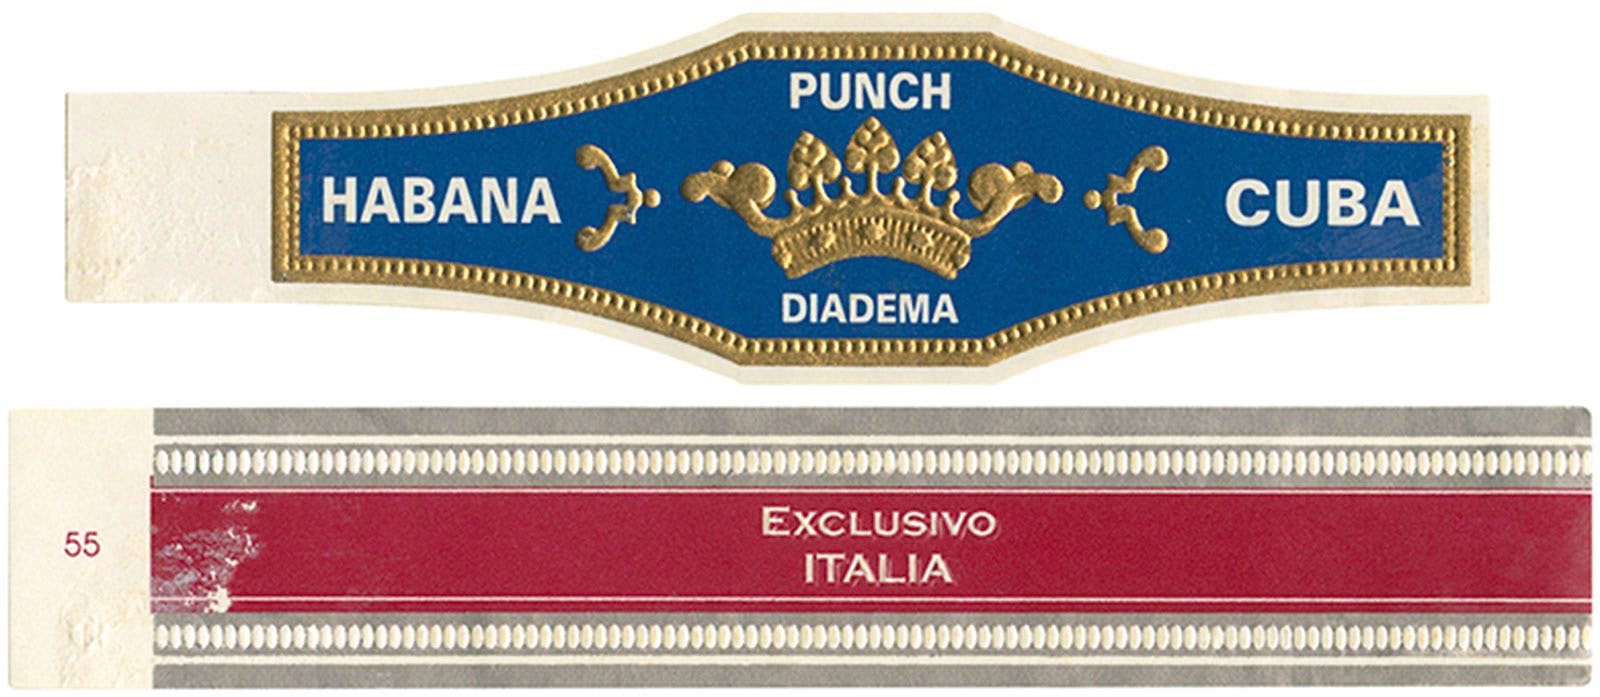 Punch Diademas Extra Exclusivo Italia (2009)